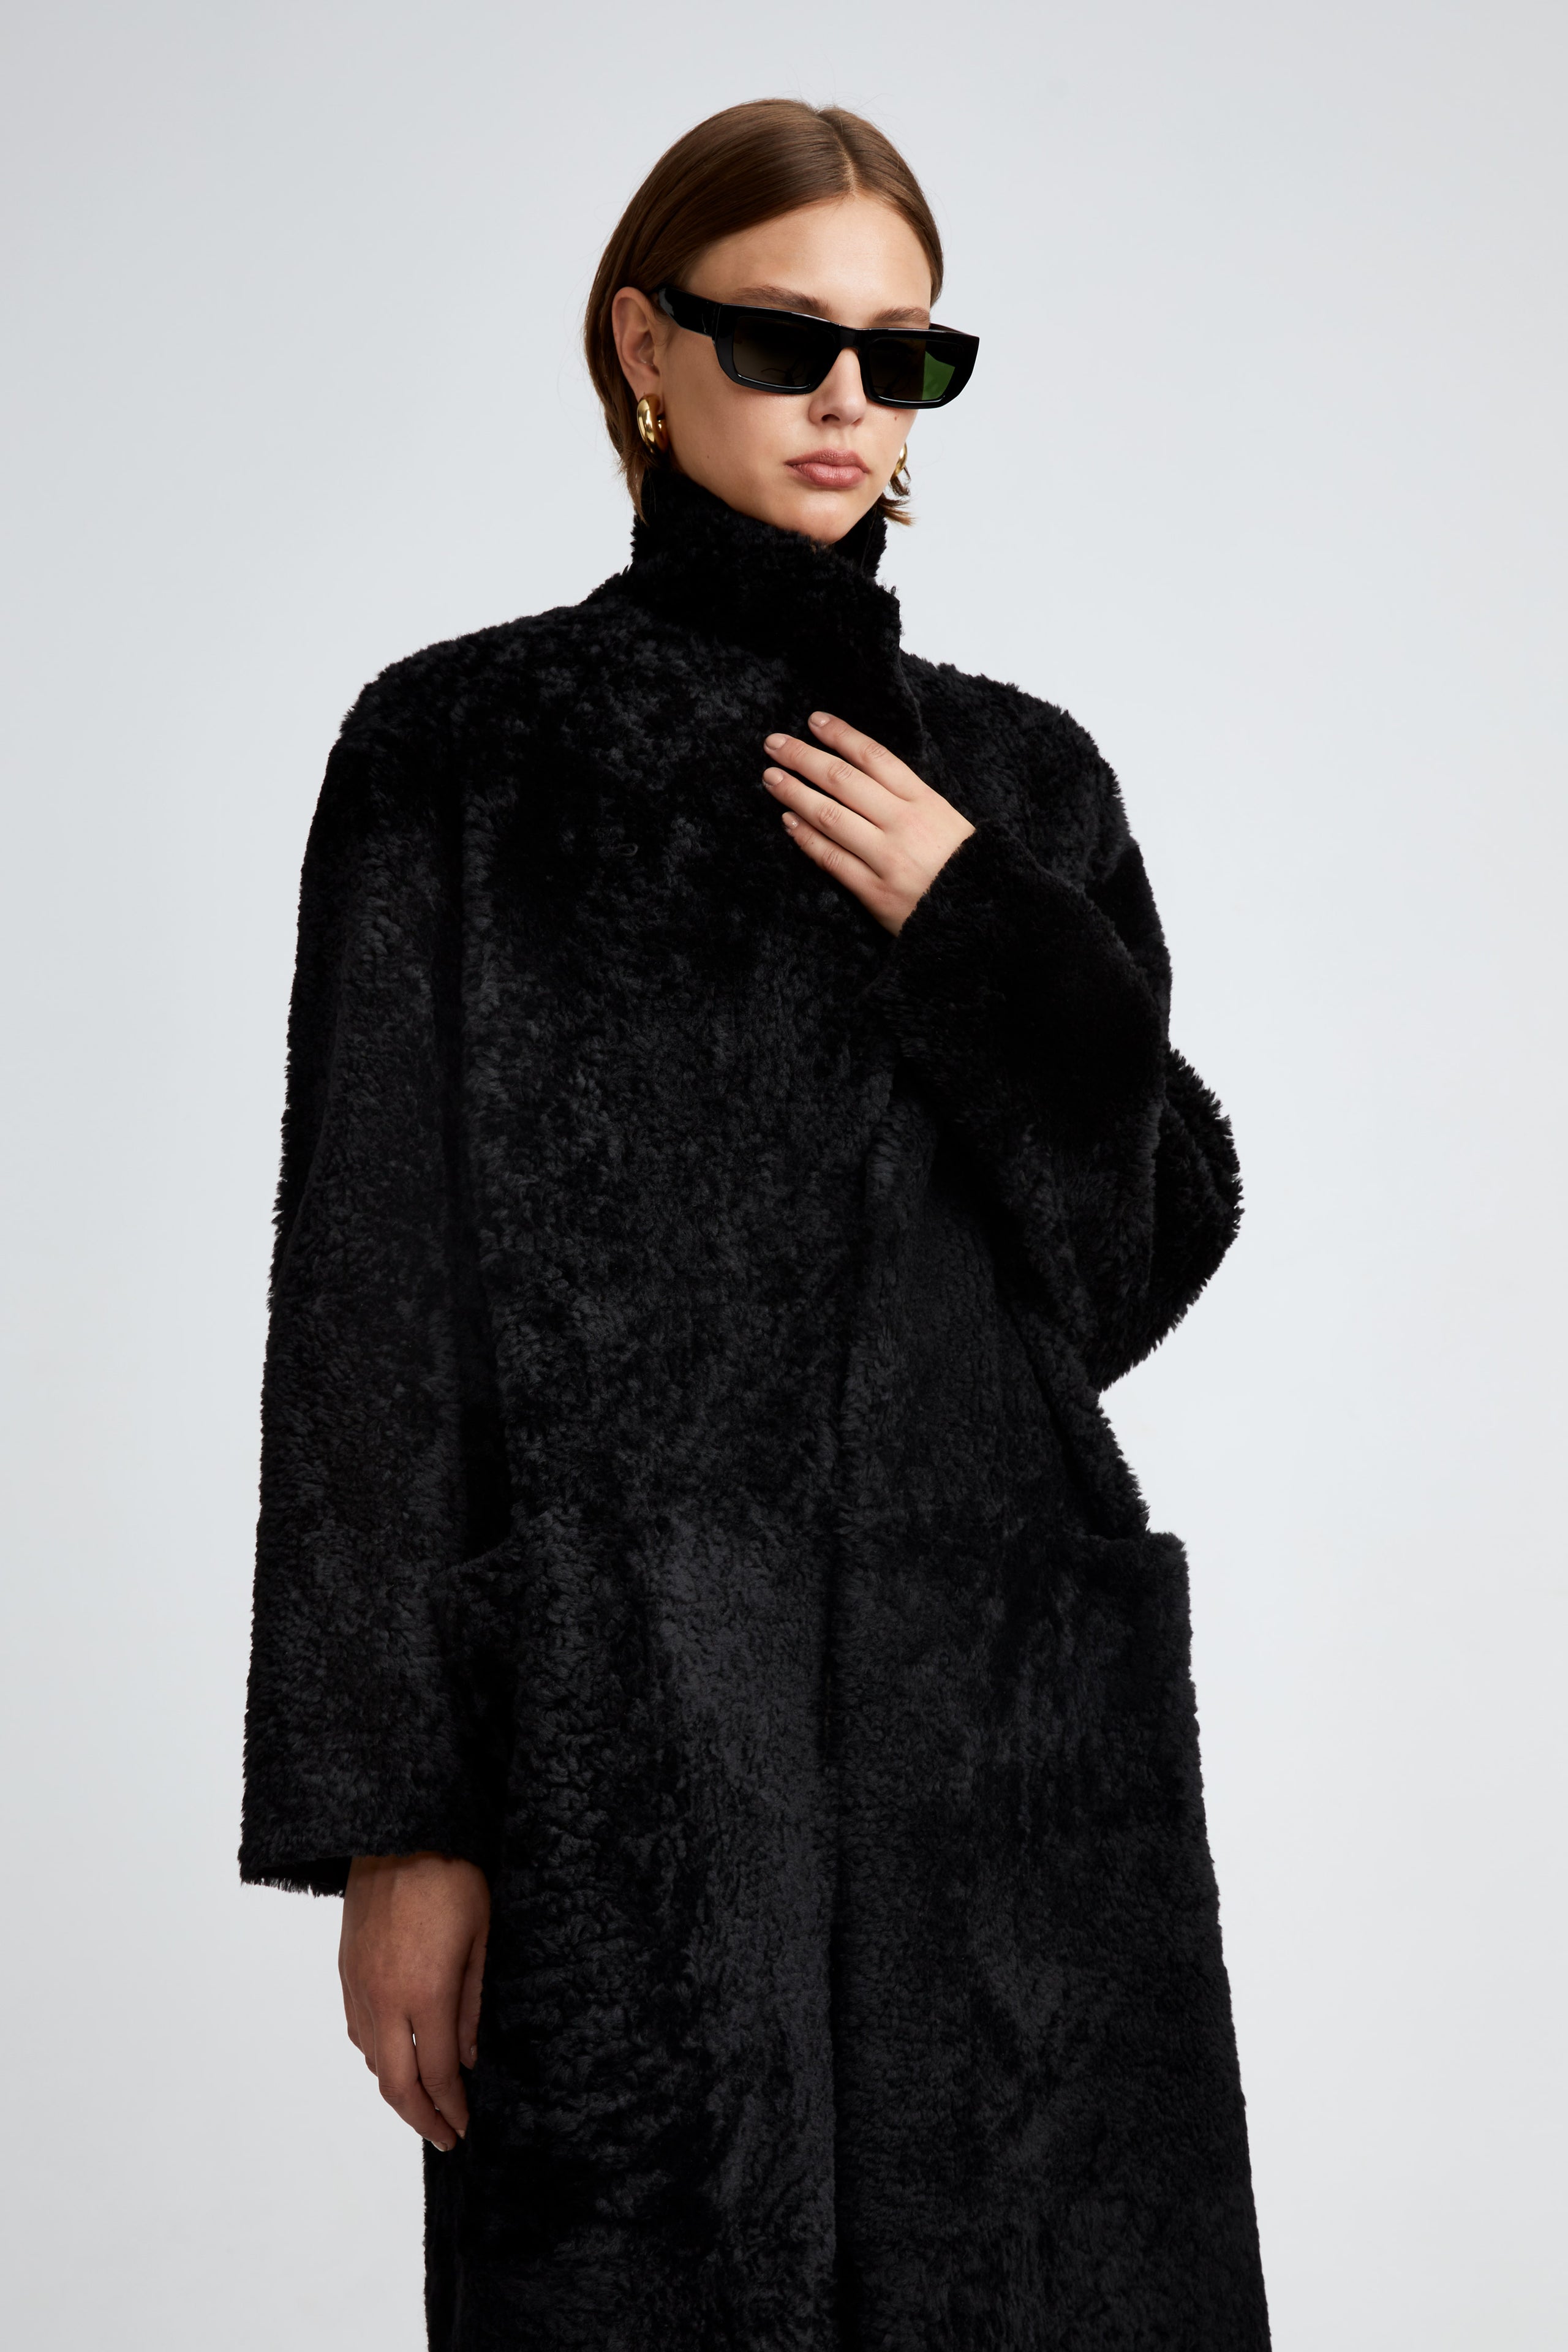 Model is wearing the Birthday Coat Black Draped Shearling Coat Close Up